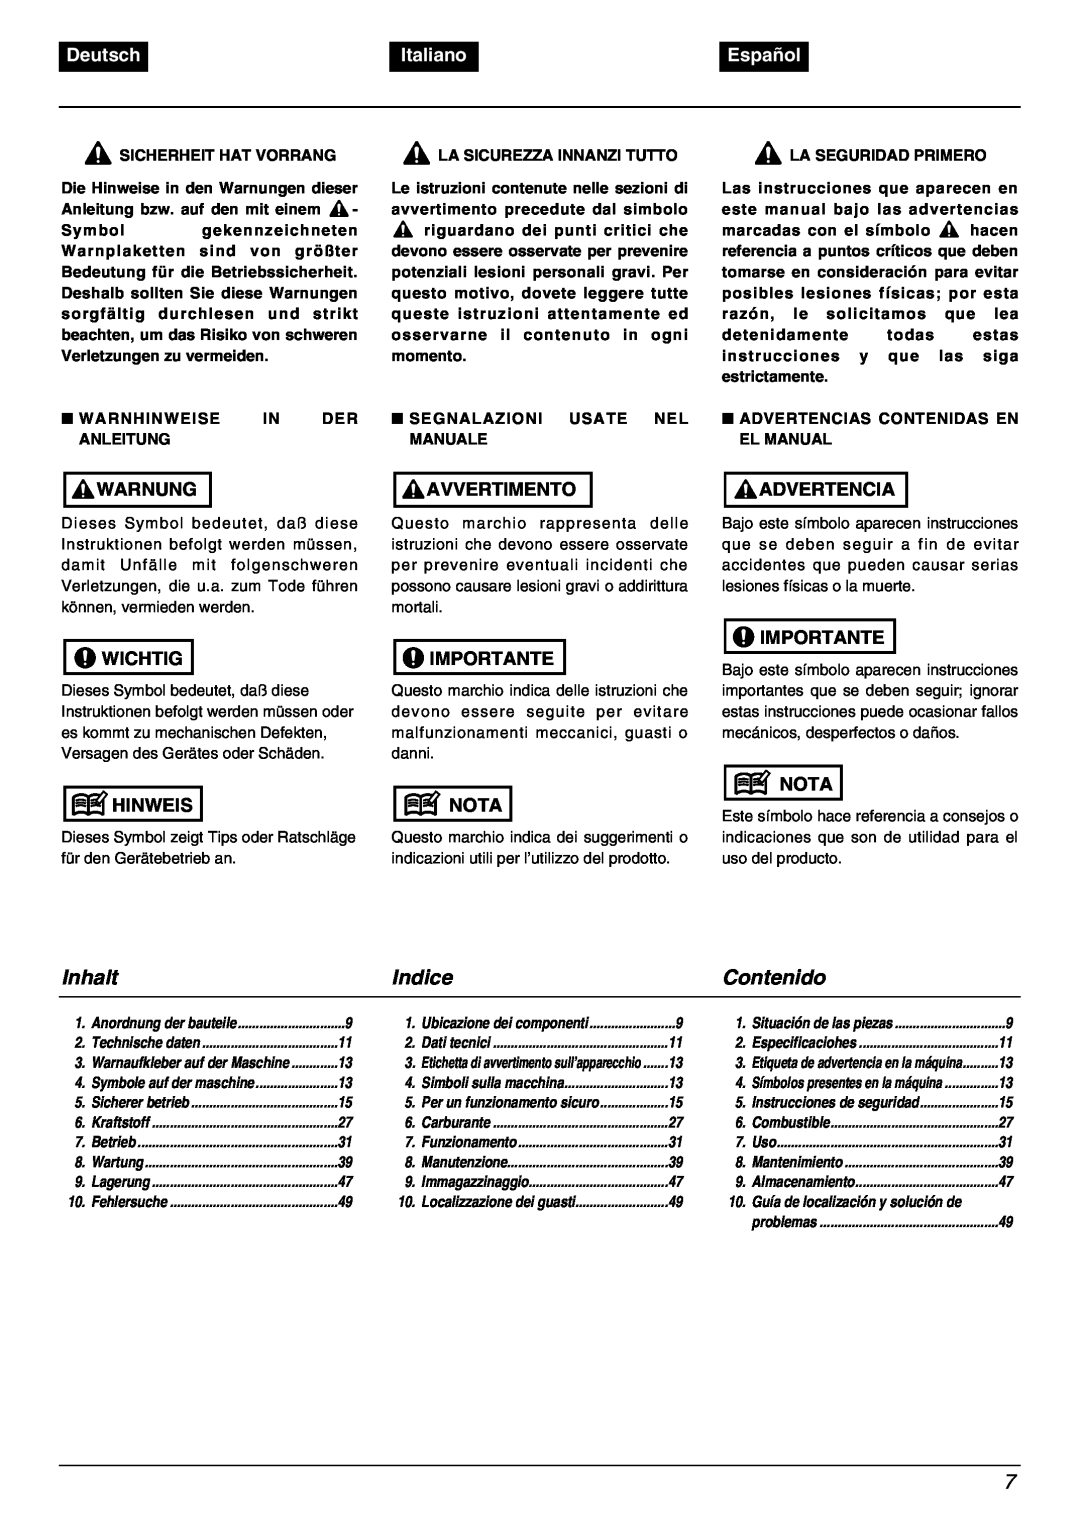 Zenoah BC2000 manual Inhalt, Indice, Contenido, Deutsch, Italiano, Español 